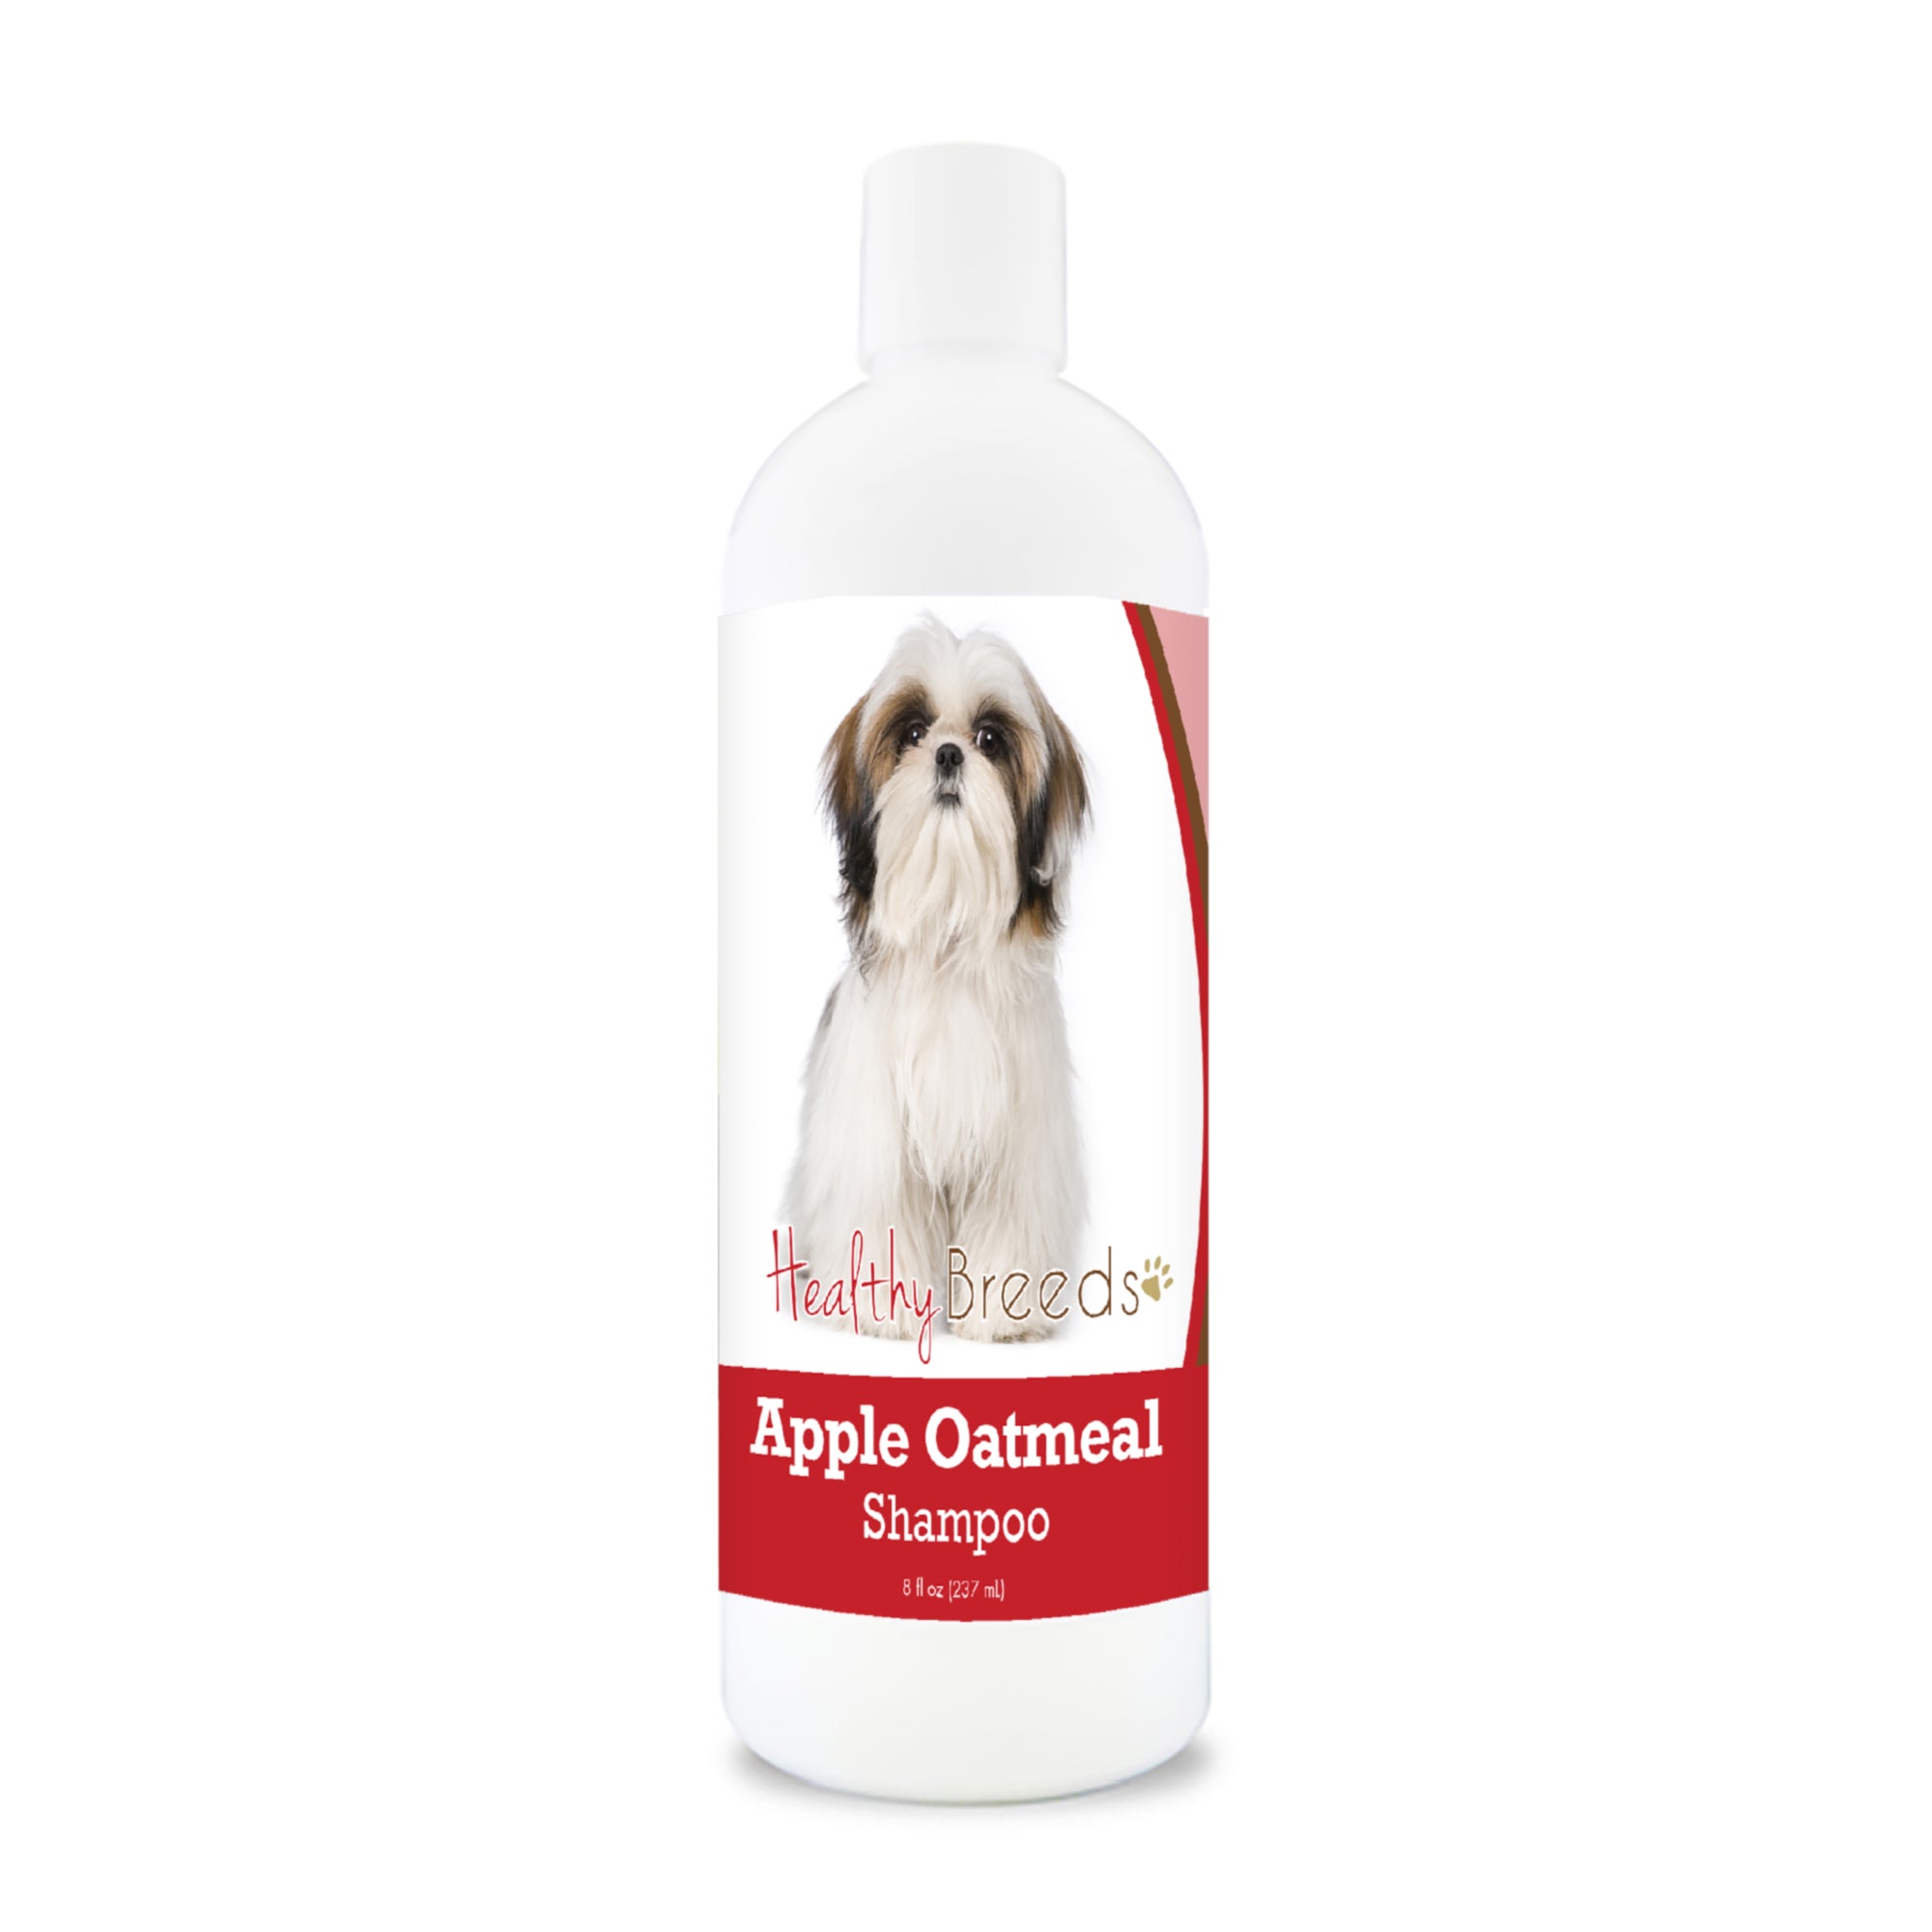 Shih Tzu Apple Oatmeal Shampoo 8 oz